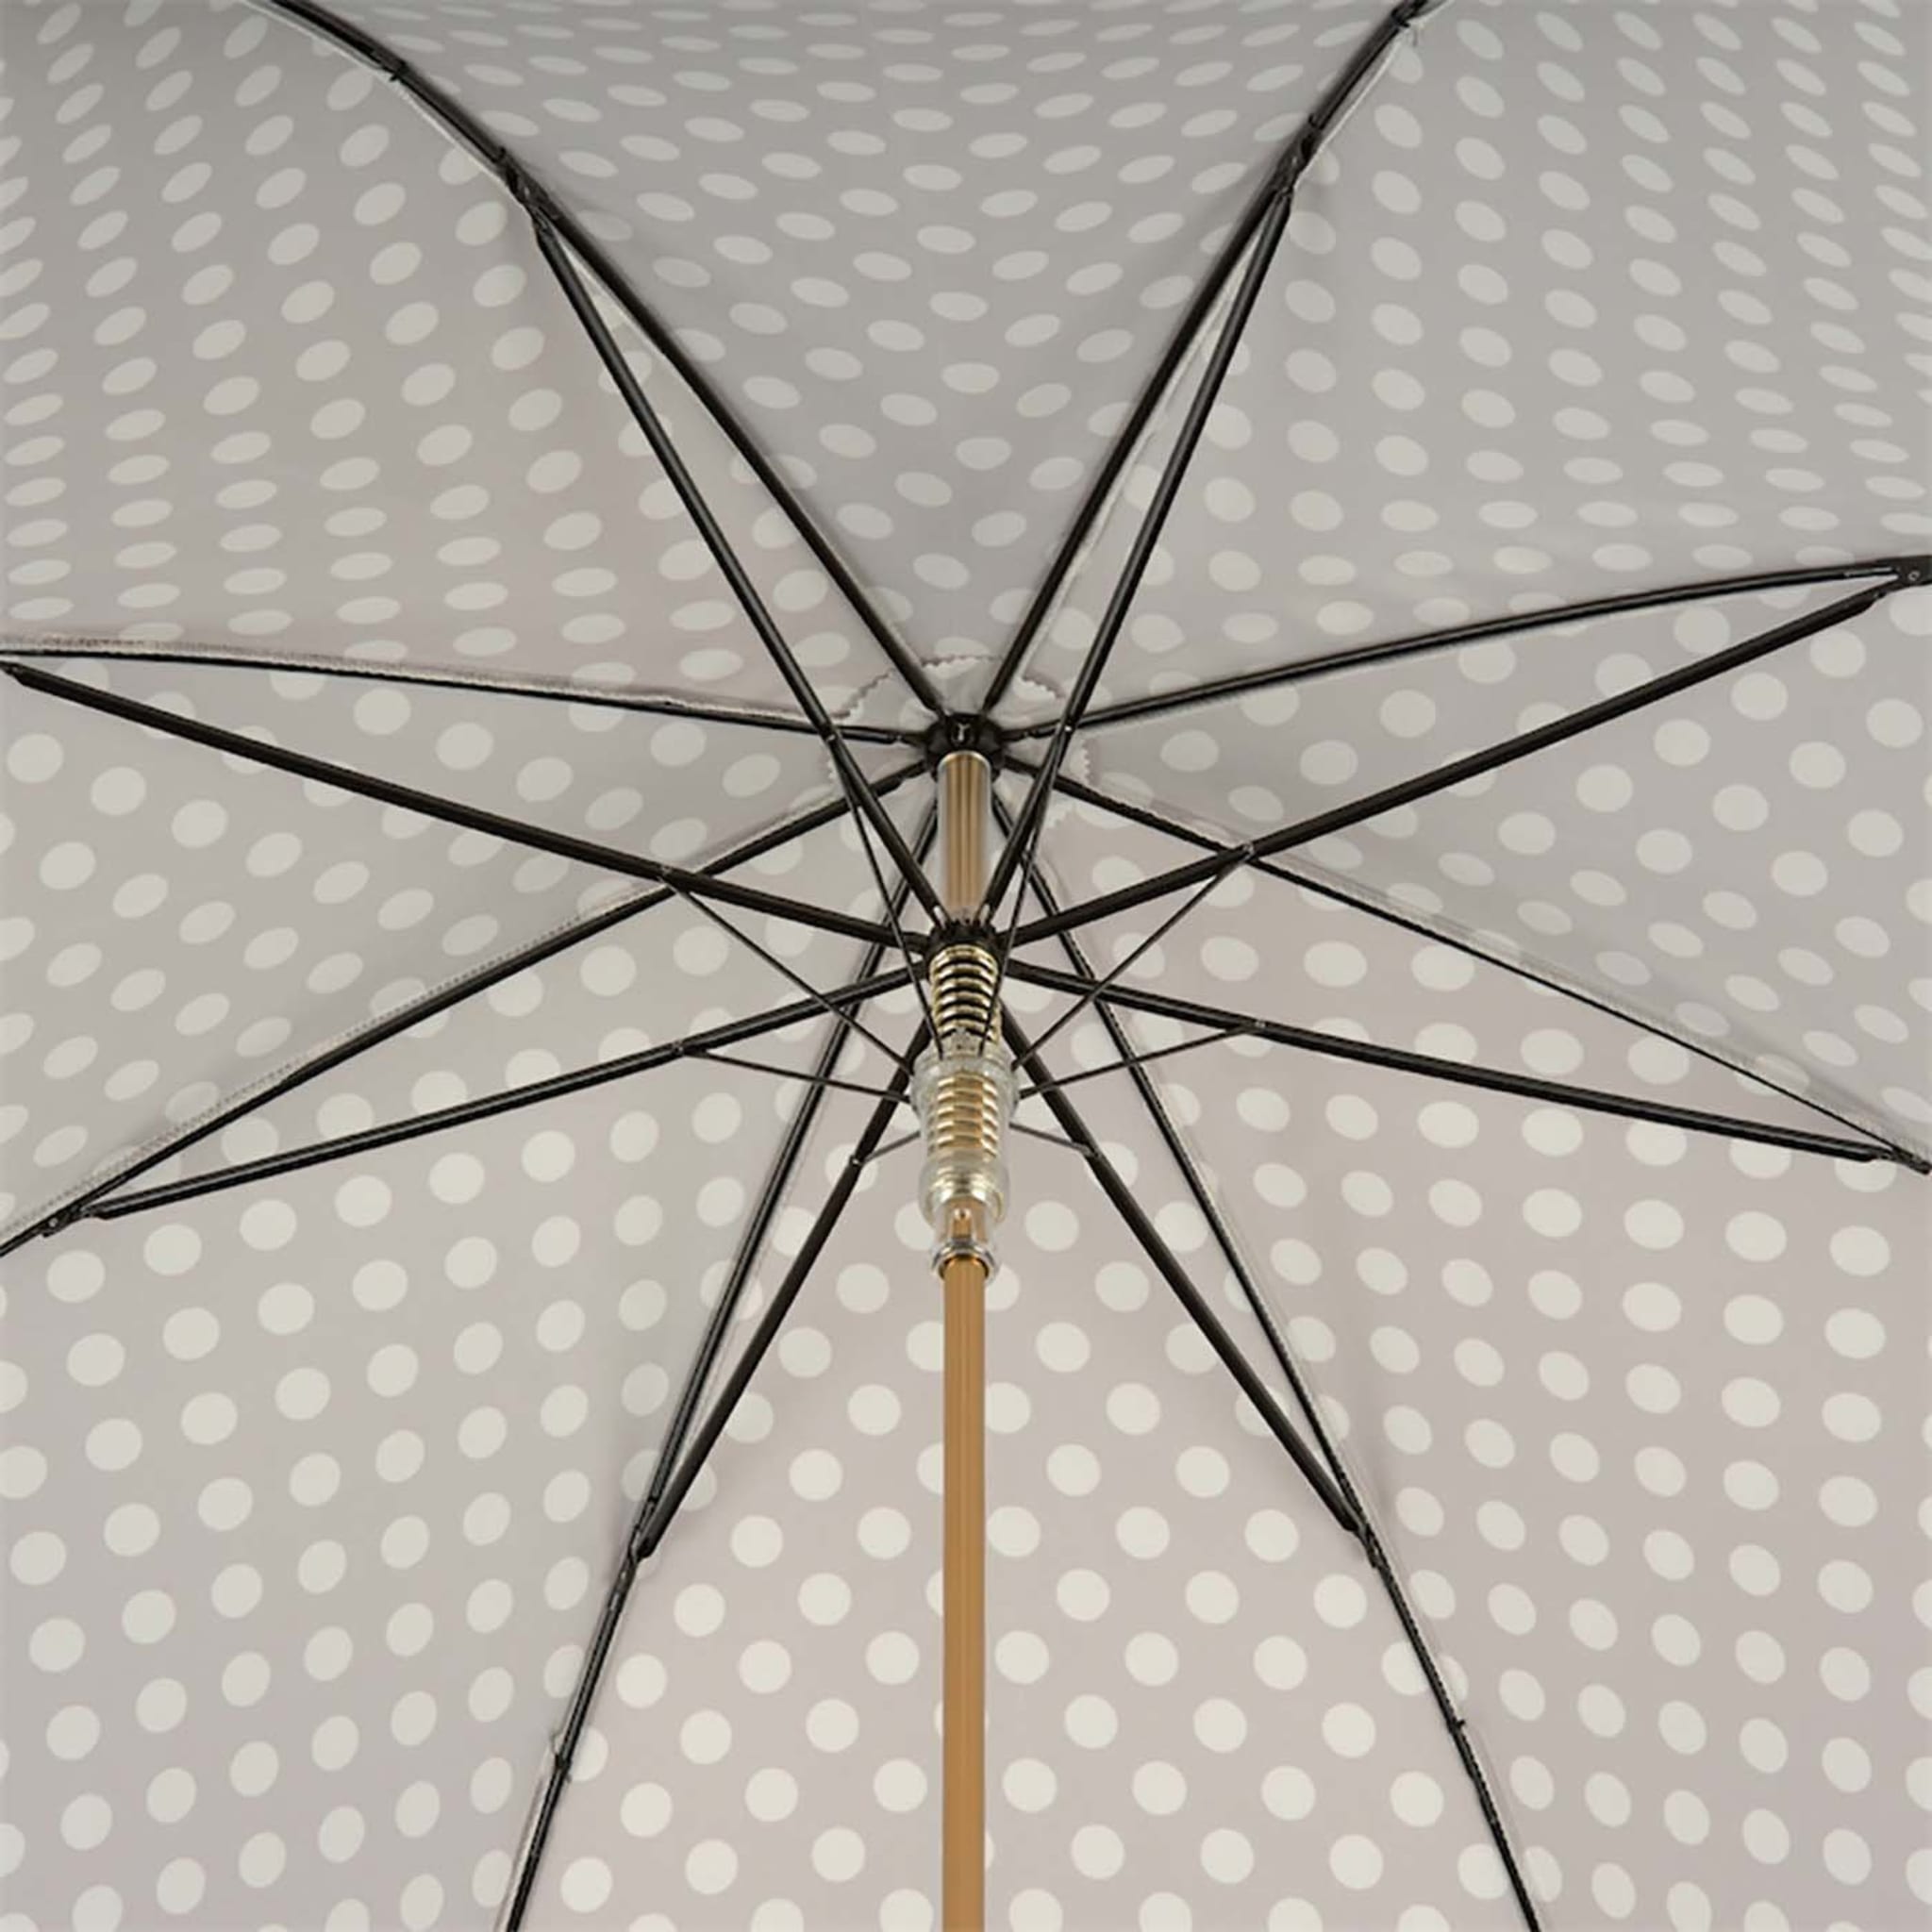 Chihuahua Umbrella with Dots - Alternative view 3